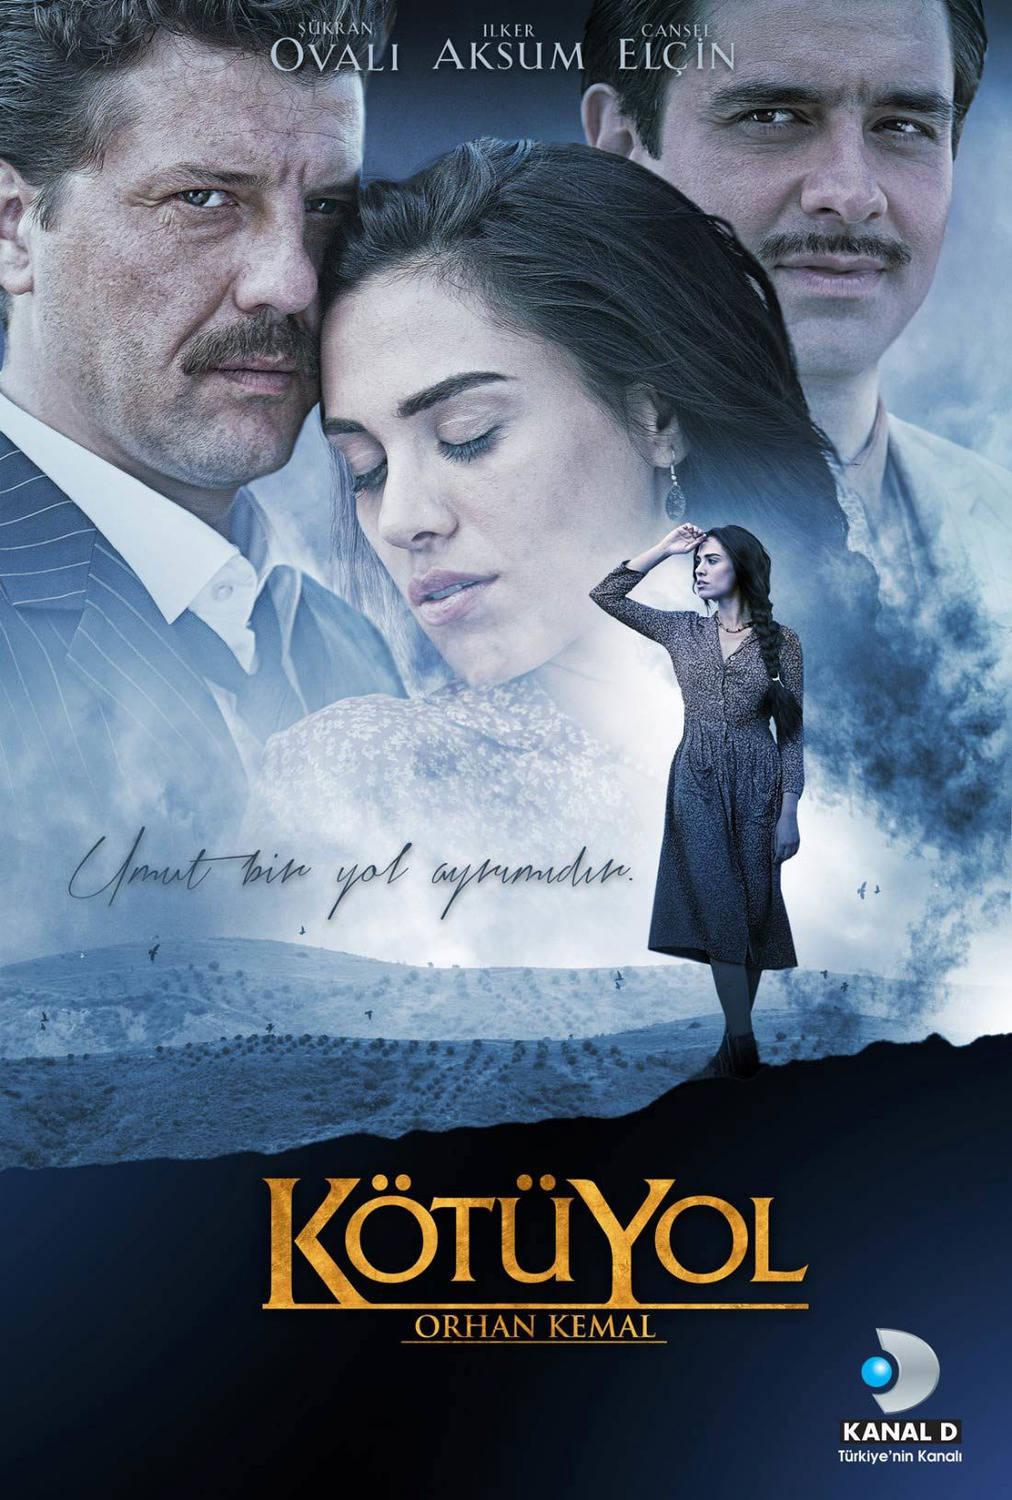 Extra Large TV Poster Image for Kötü Yol (#1 of 2)